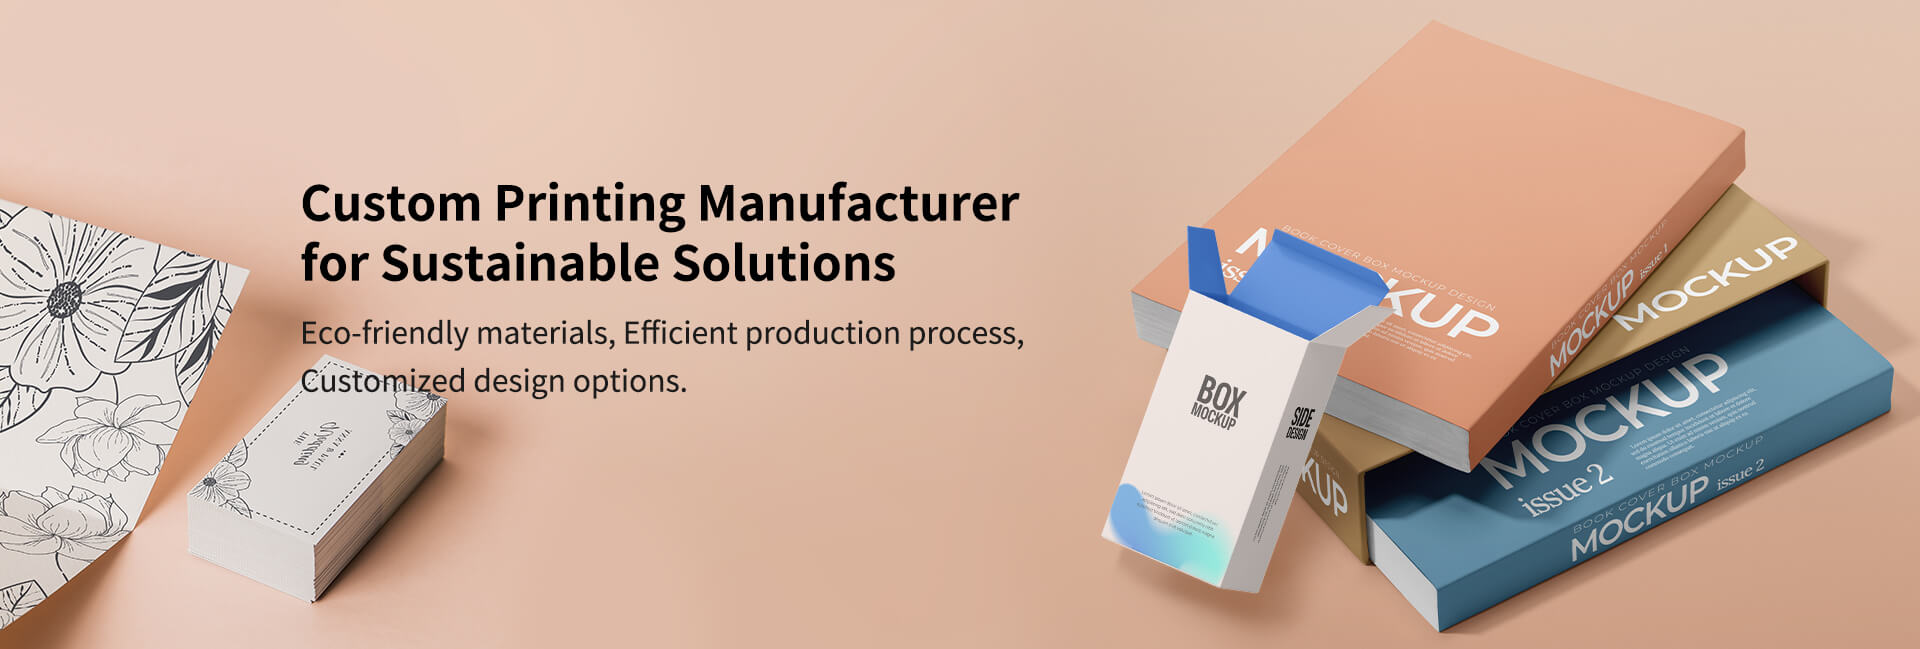 Custom Printing Manufacturer